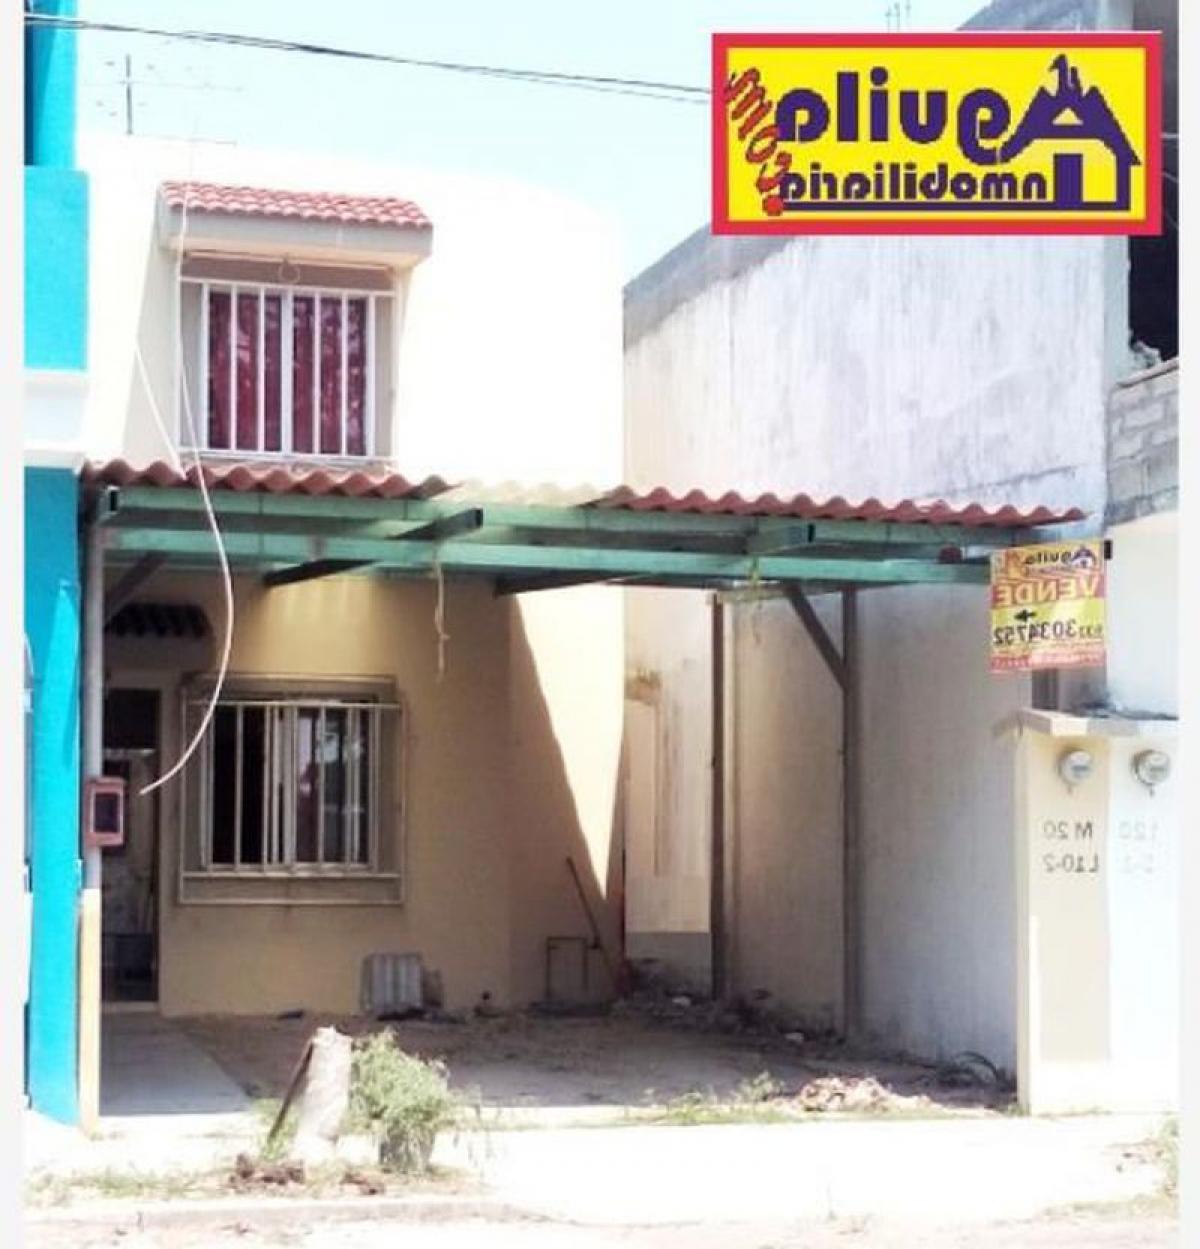 Picture of Home For Sale in Comalcalco, Tabasco, Mexico